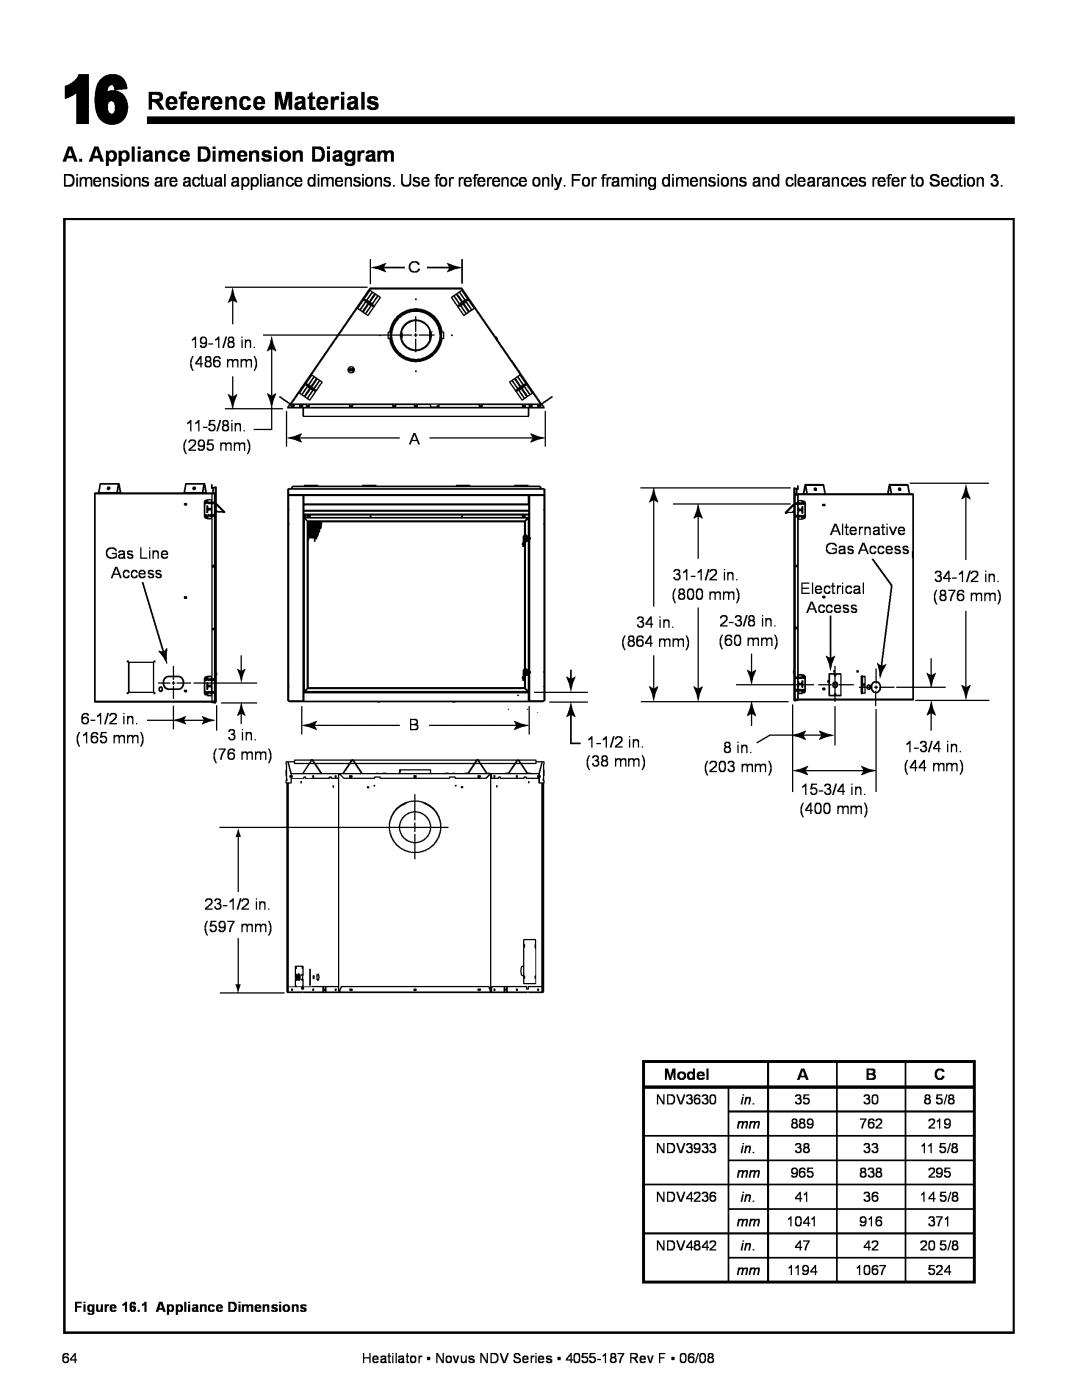 Hearth and Home Technologies NDV4236IL, NDV3630, NDV3933L Reference Materials, A. Appliance Dimension Diagram, Model 